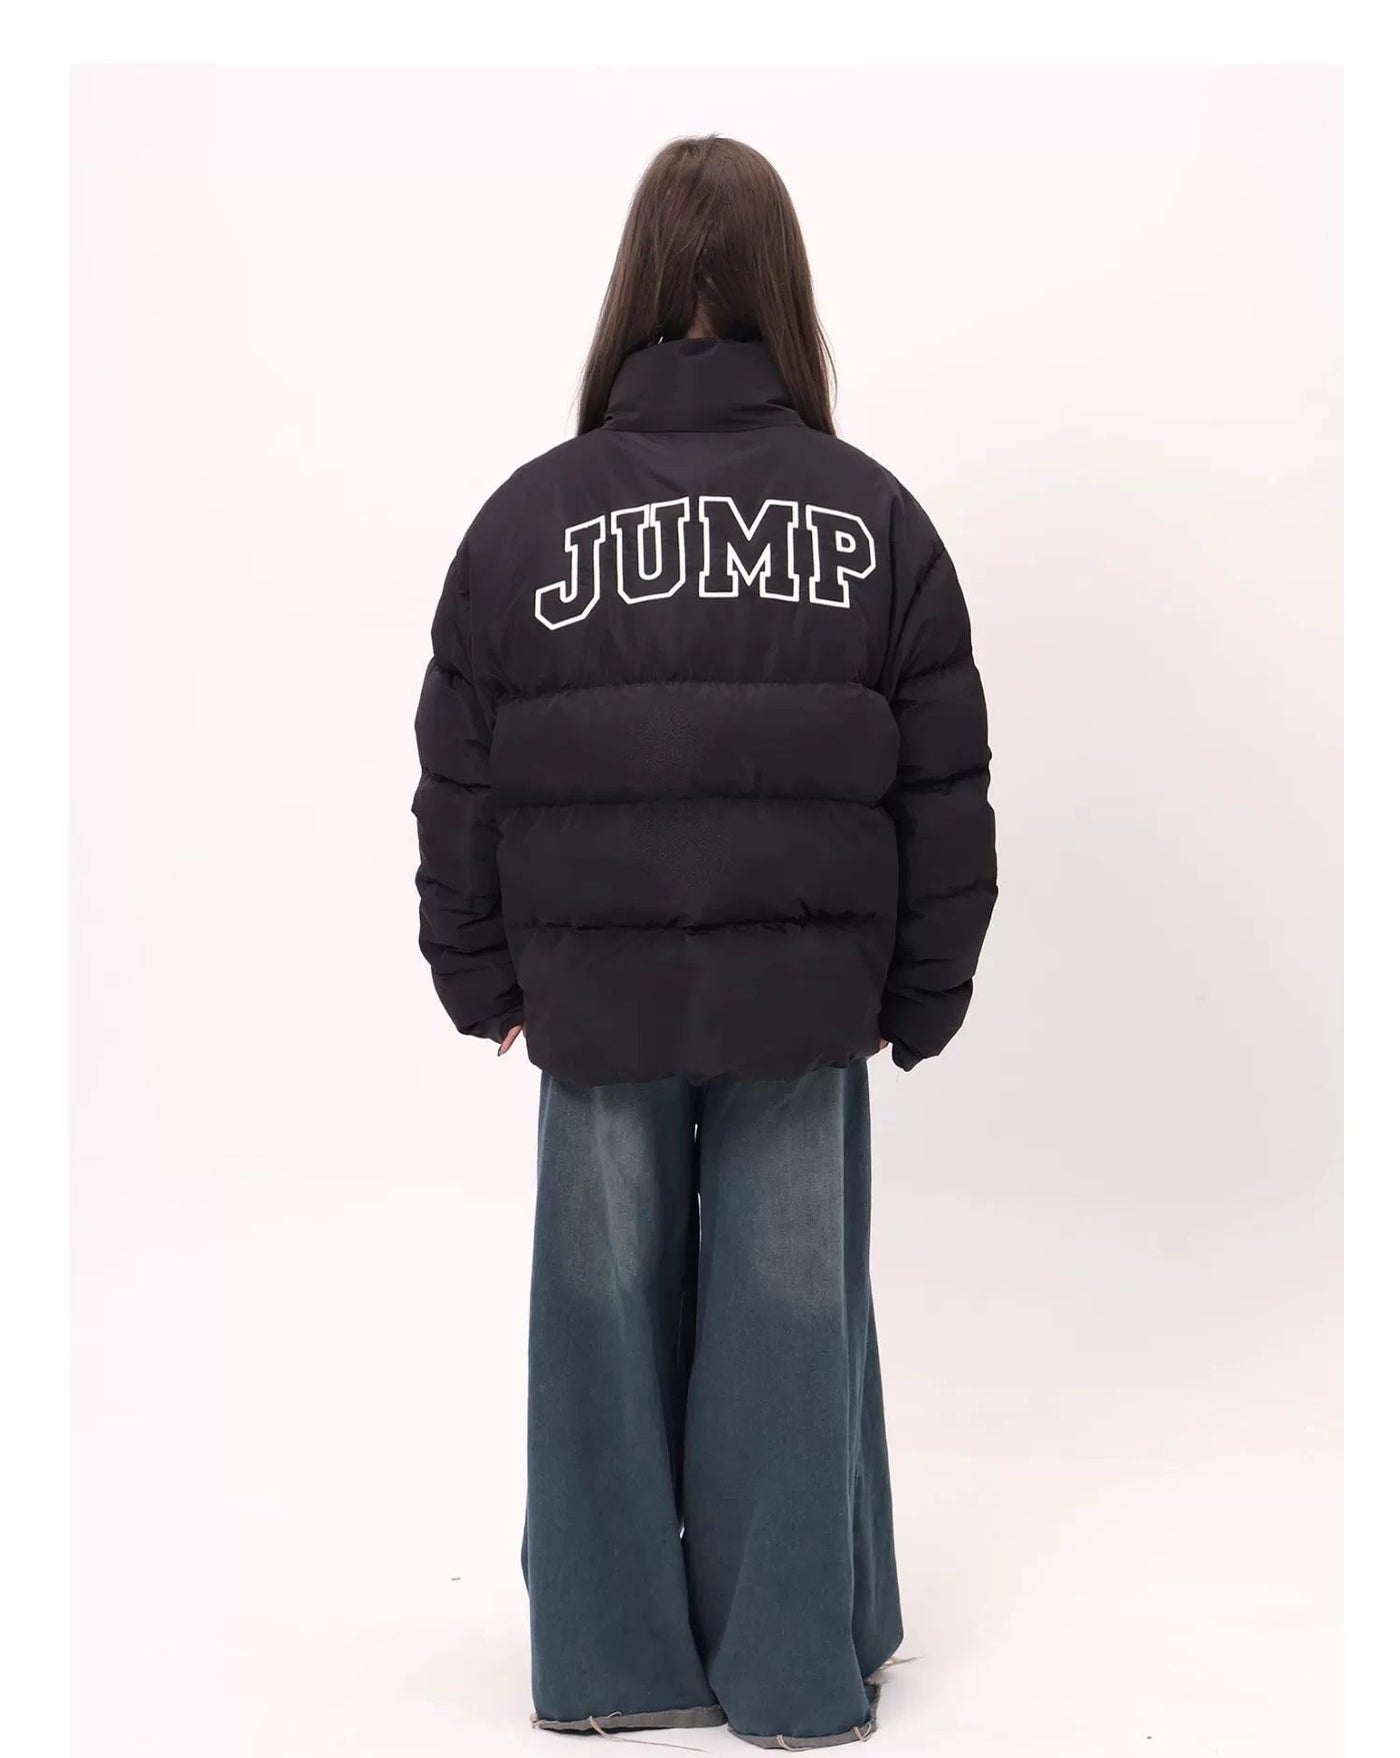 Dual Zip Puffer Jacket Korean Street Fashion Jacket By Jump Next Shop Online at OH Vault